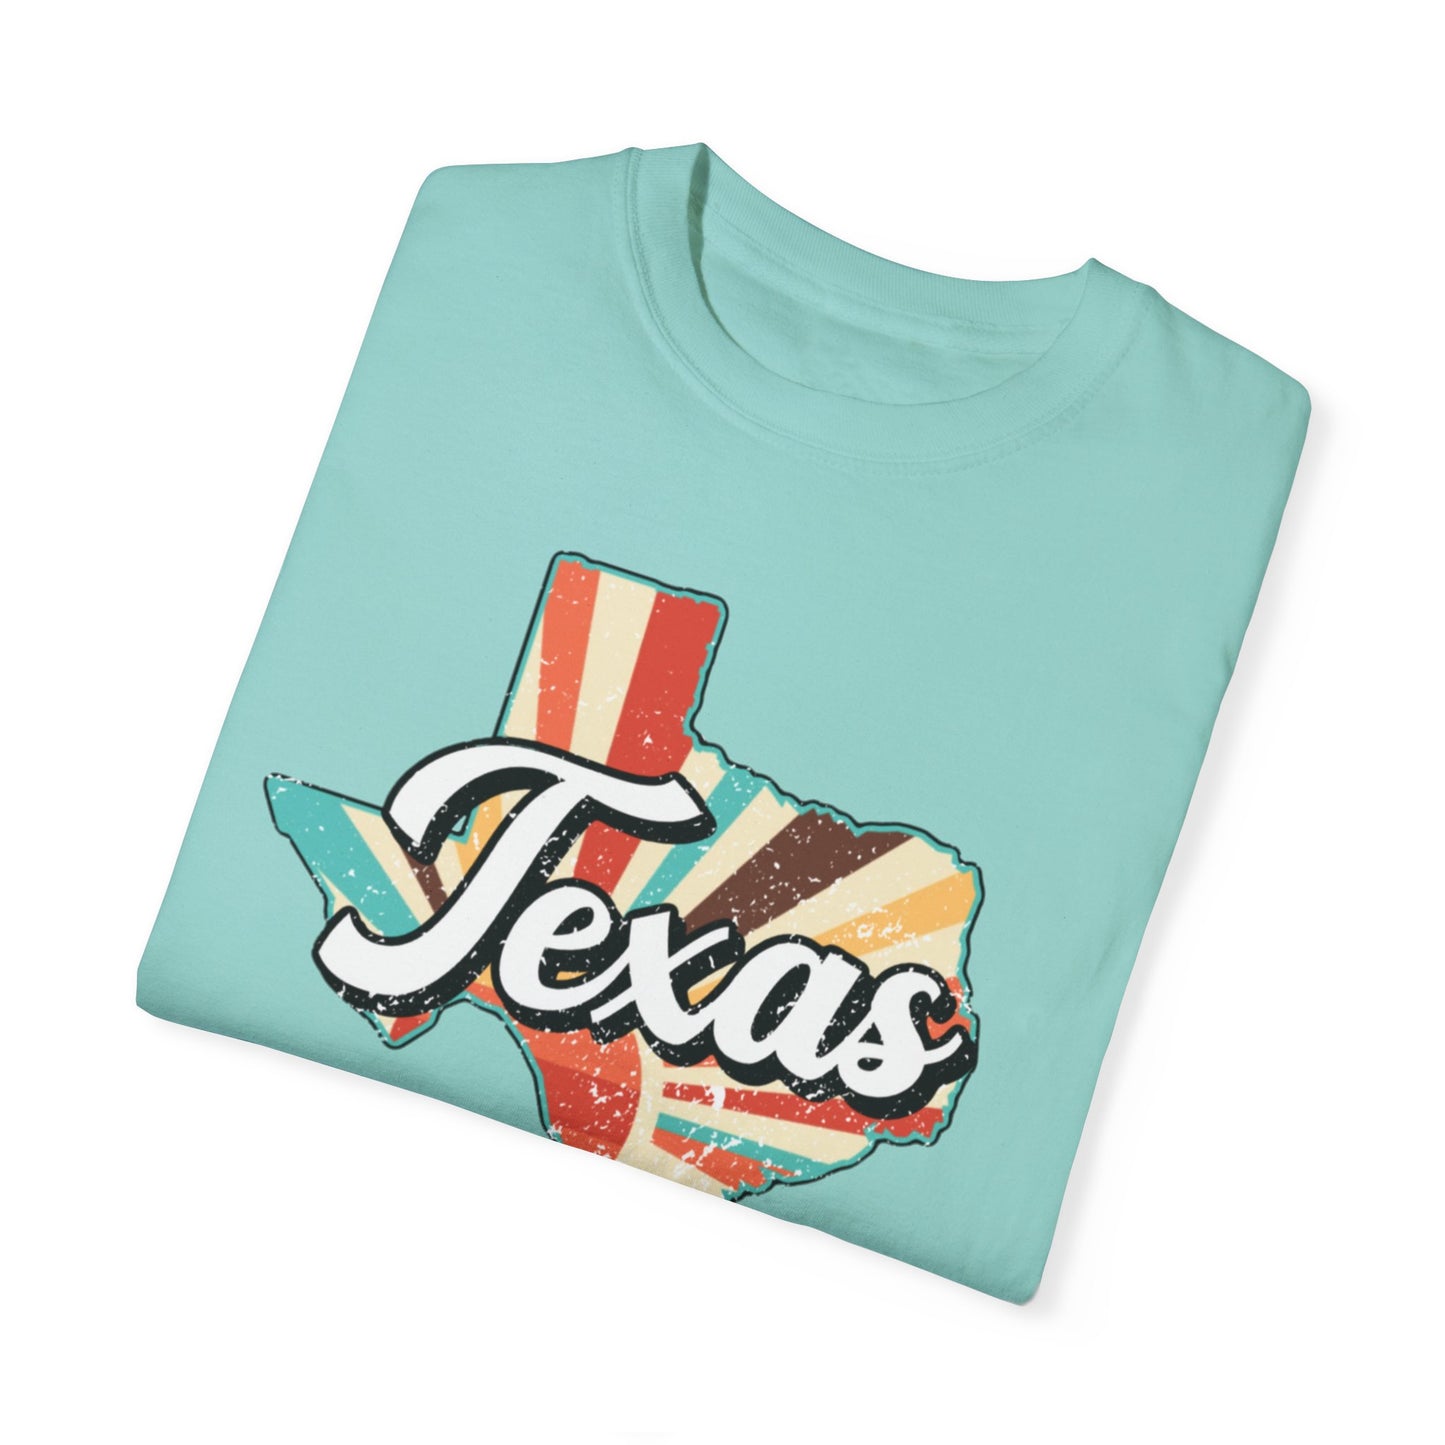 Retro Texas Comfort Colors Tshirt